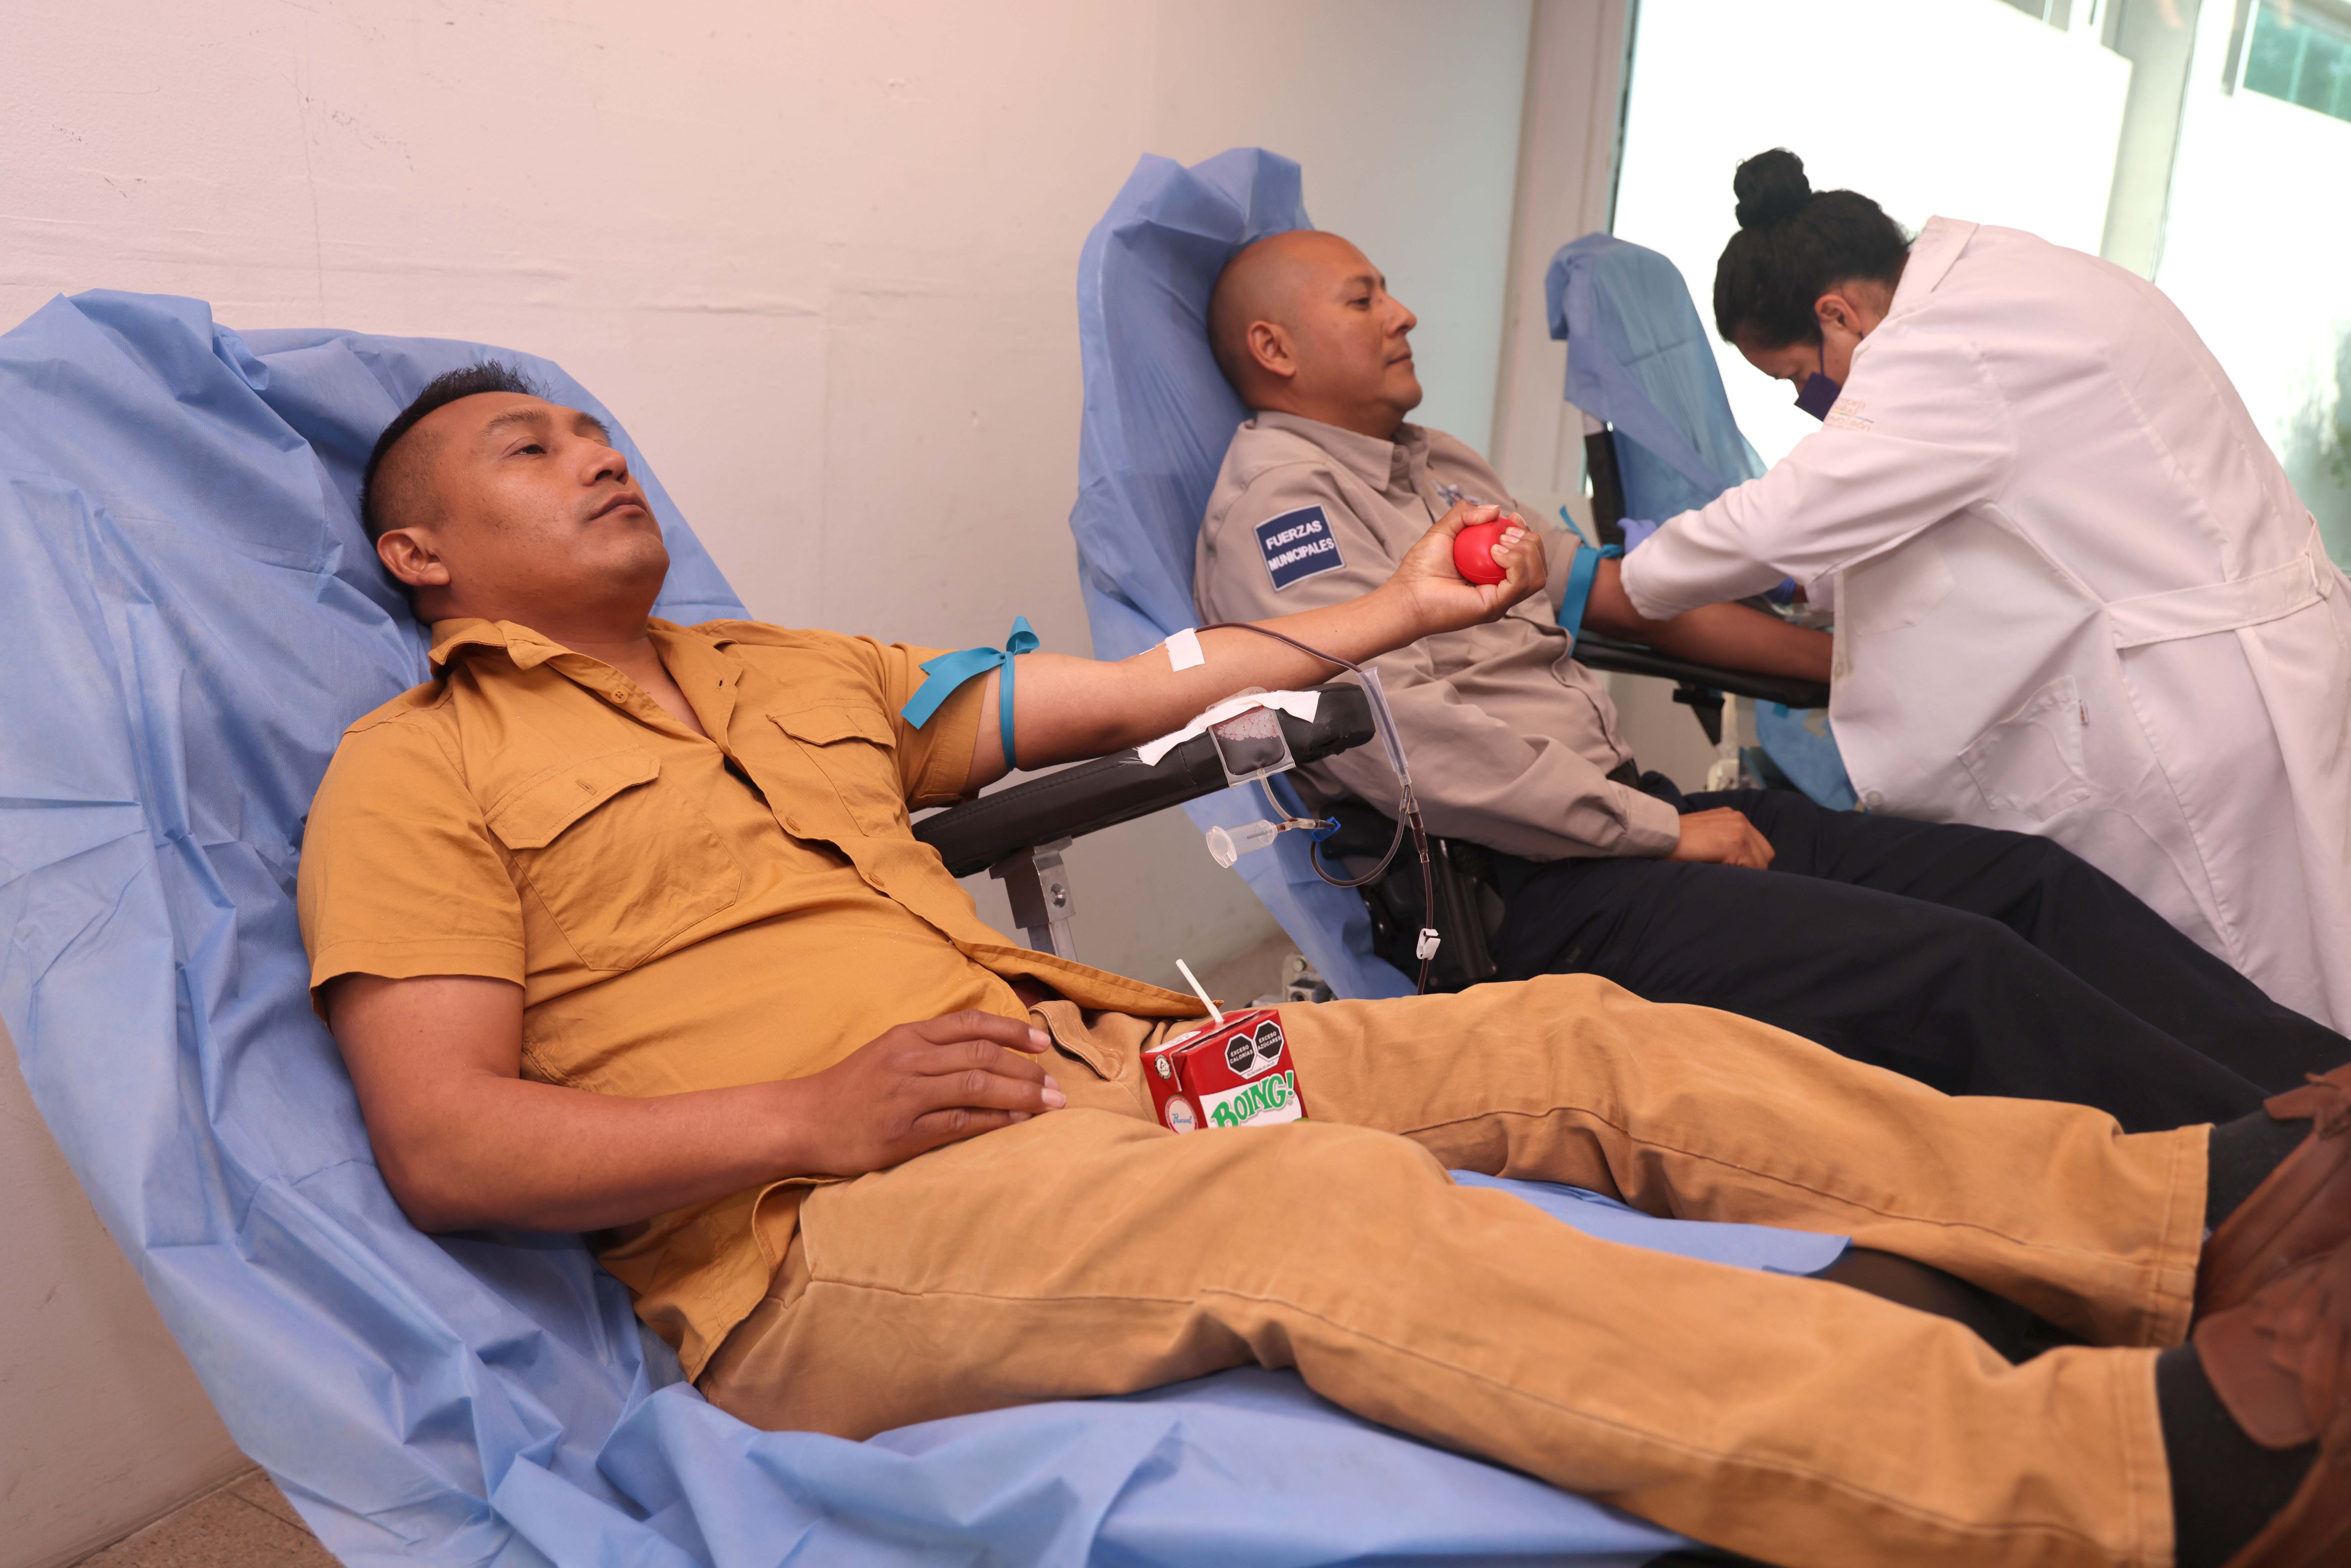 Inicia San Nicolás campaña de donación de sangre